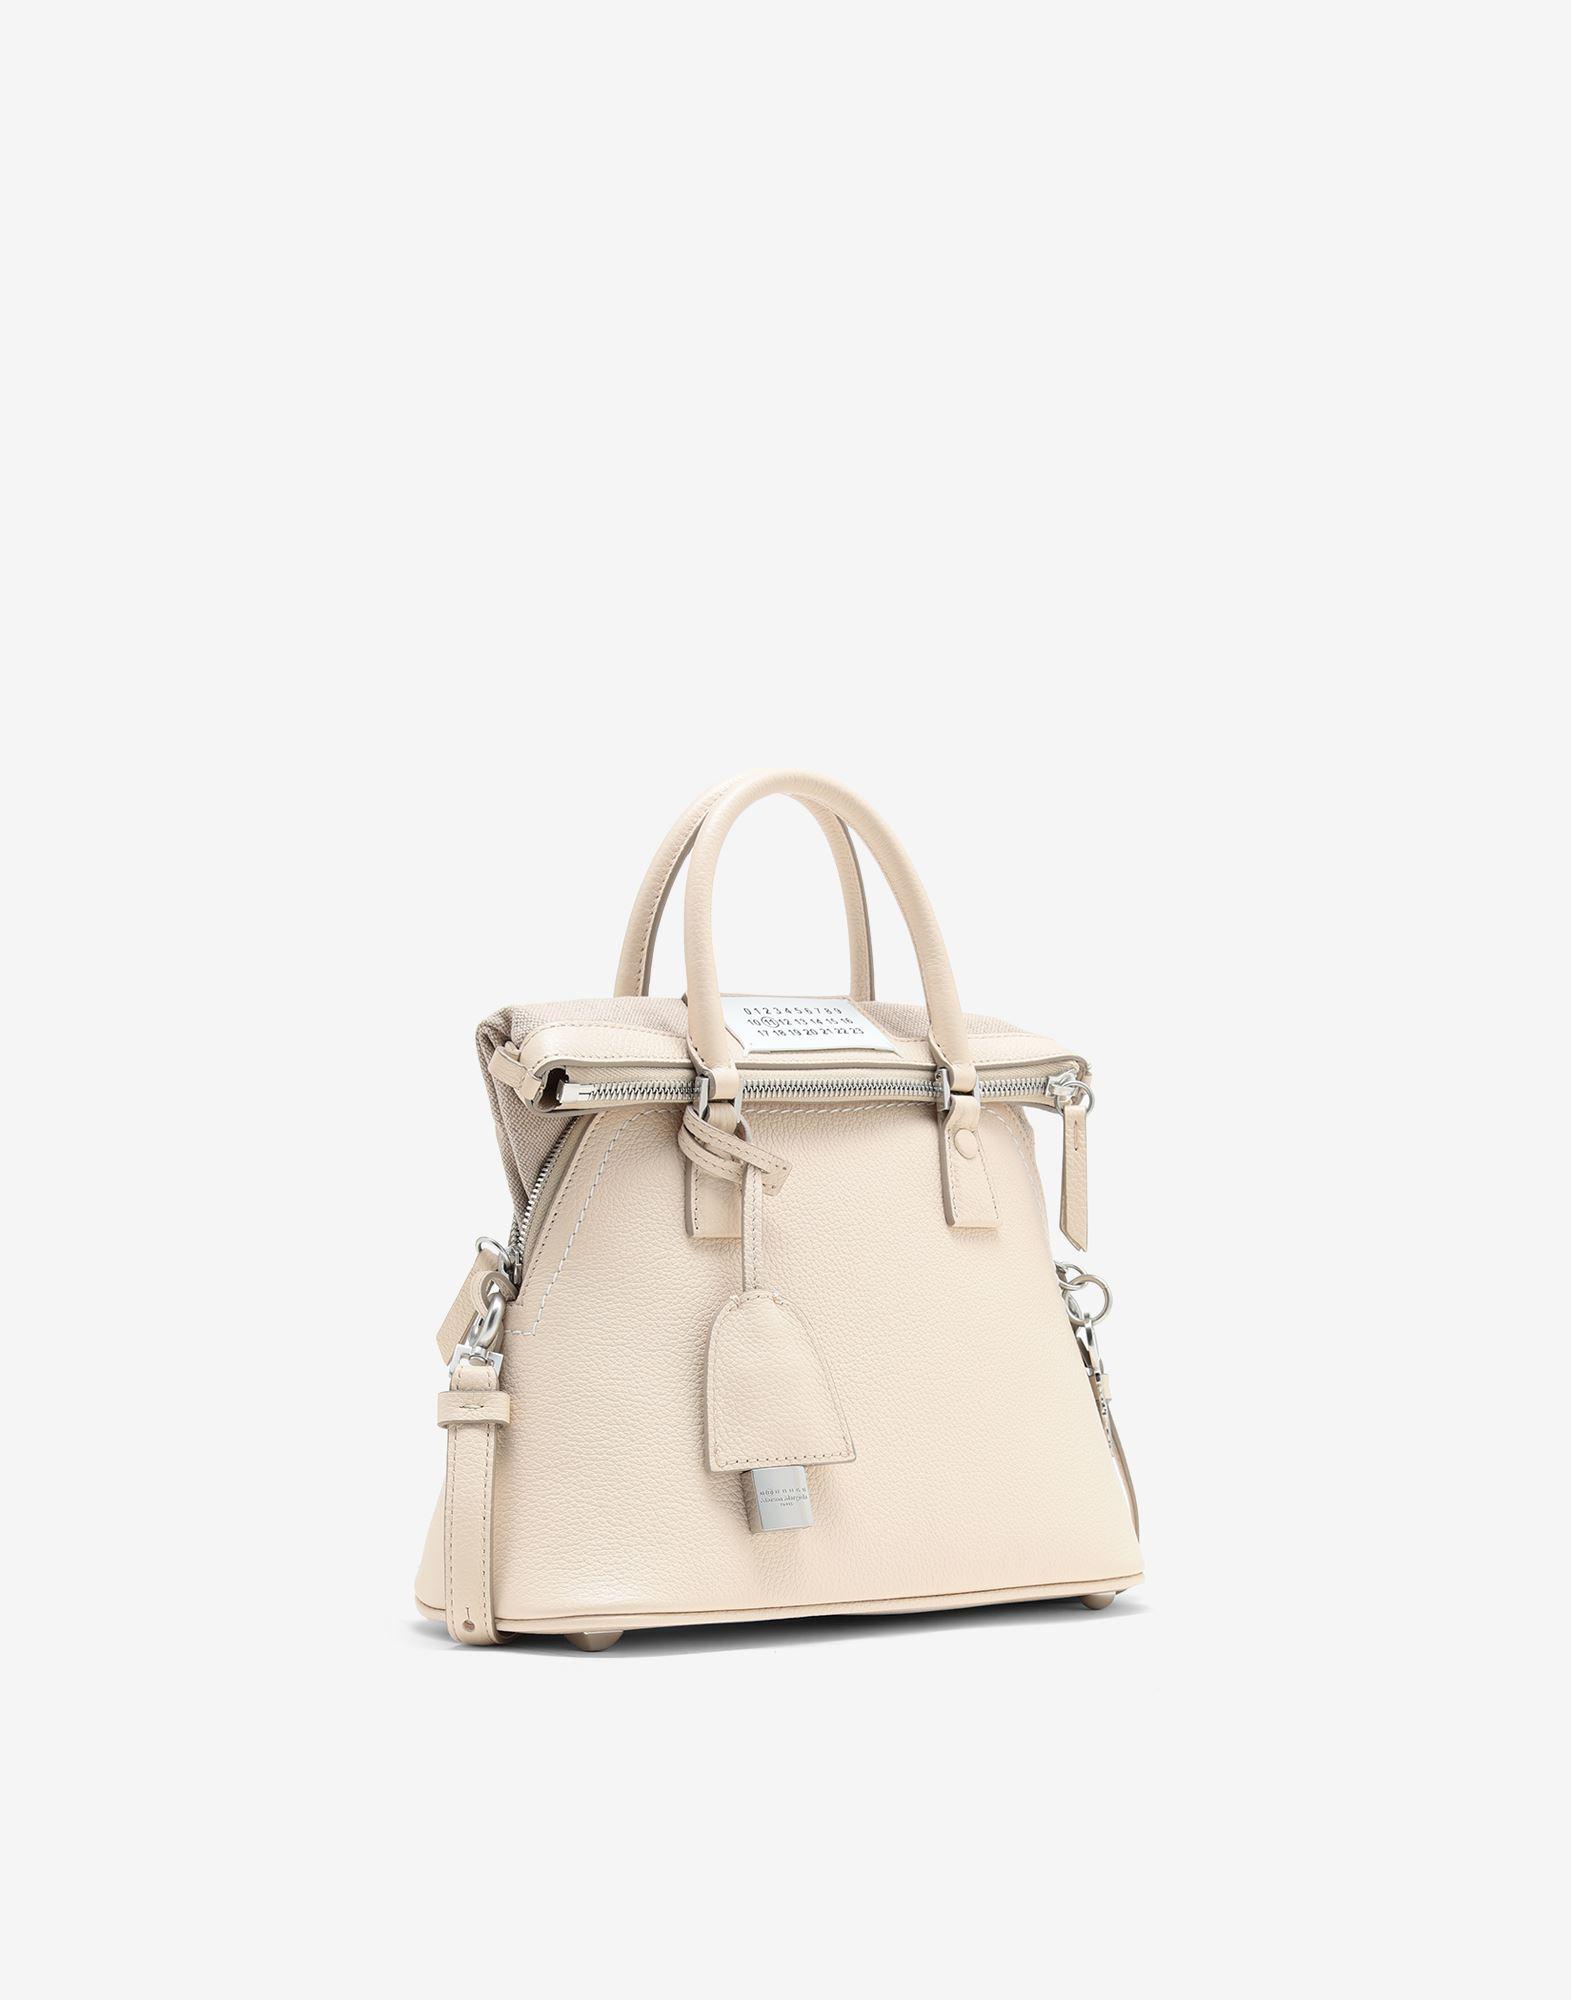 Maison Margiela Leather 5ac Mini Bag in Ivory (White) - Lyst